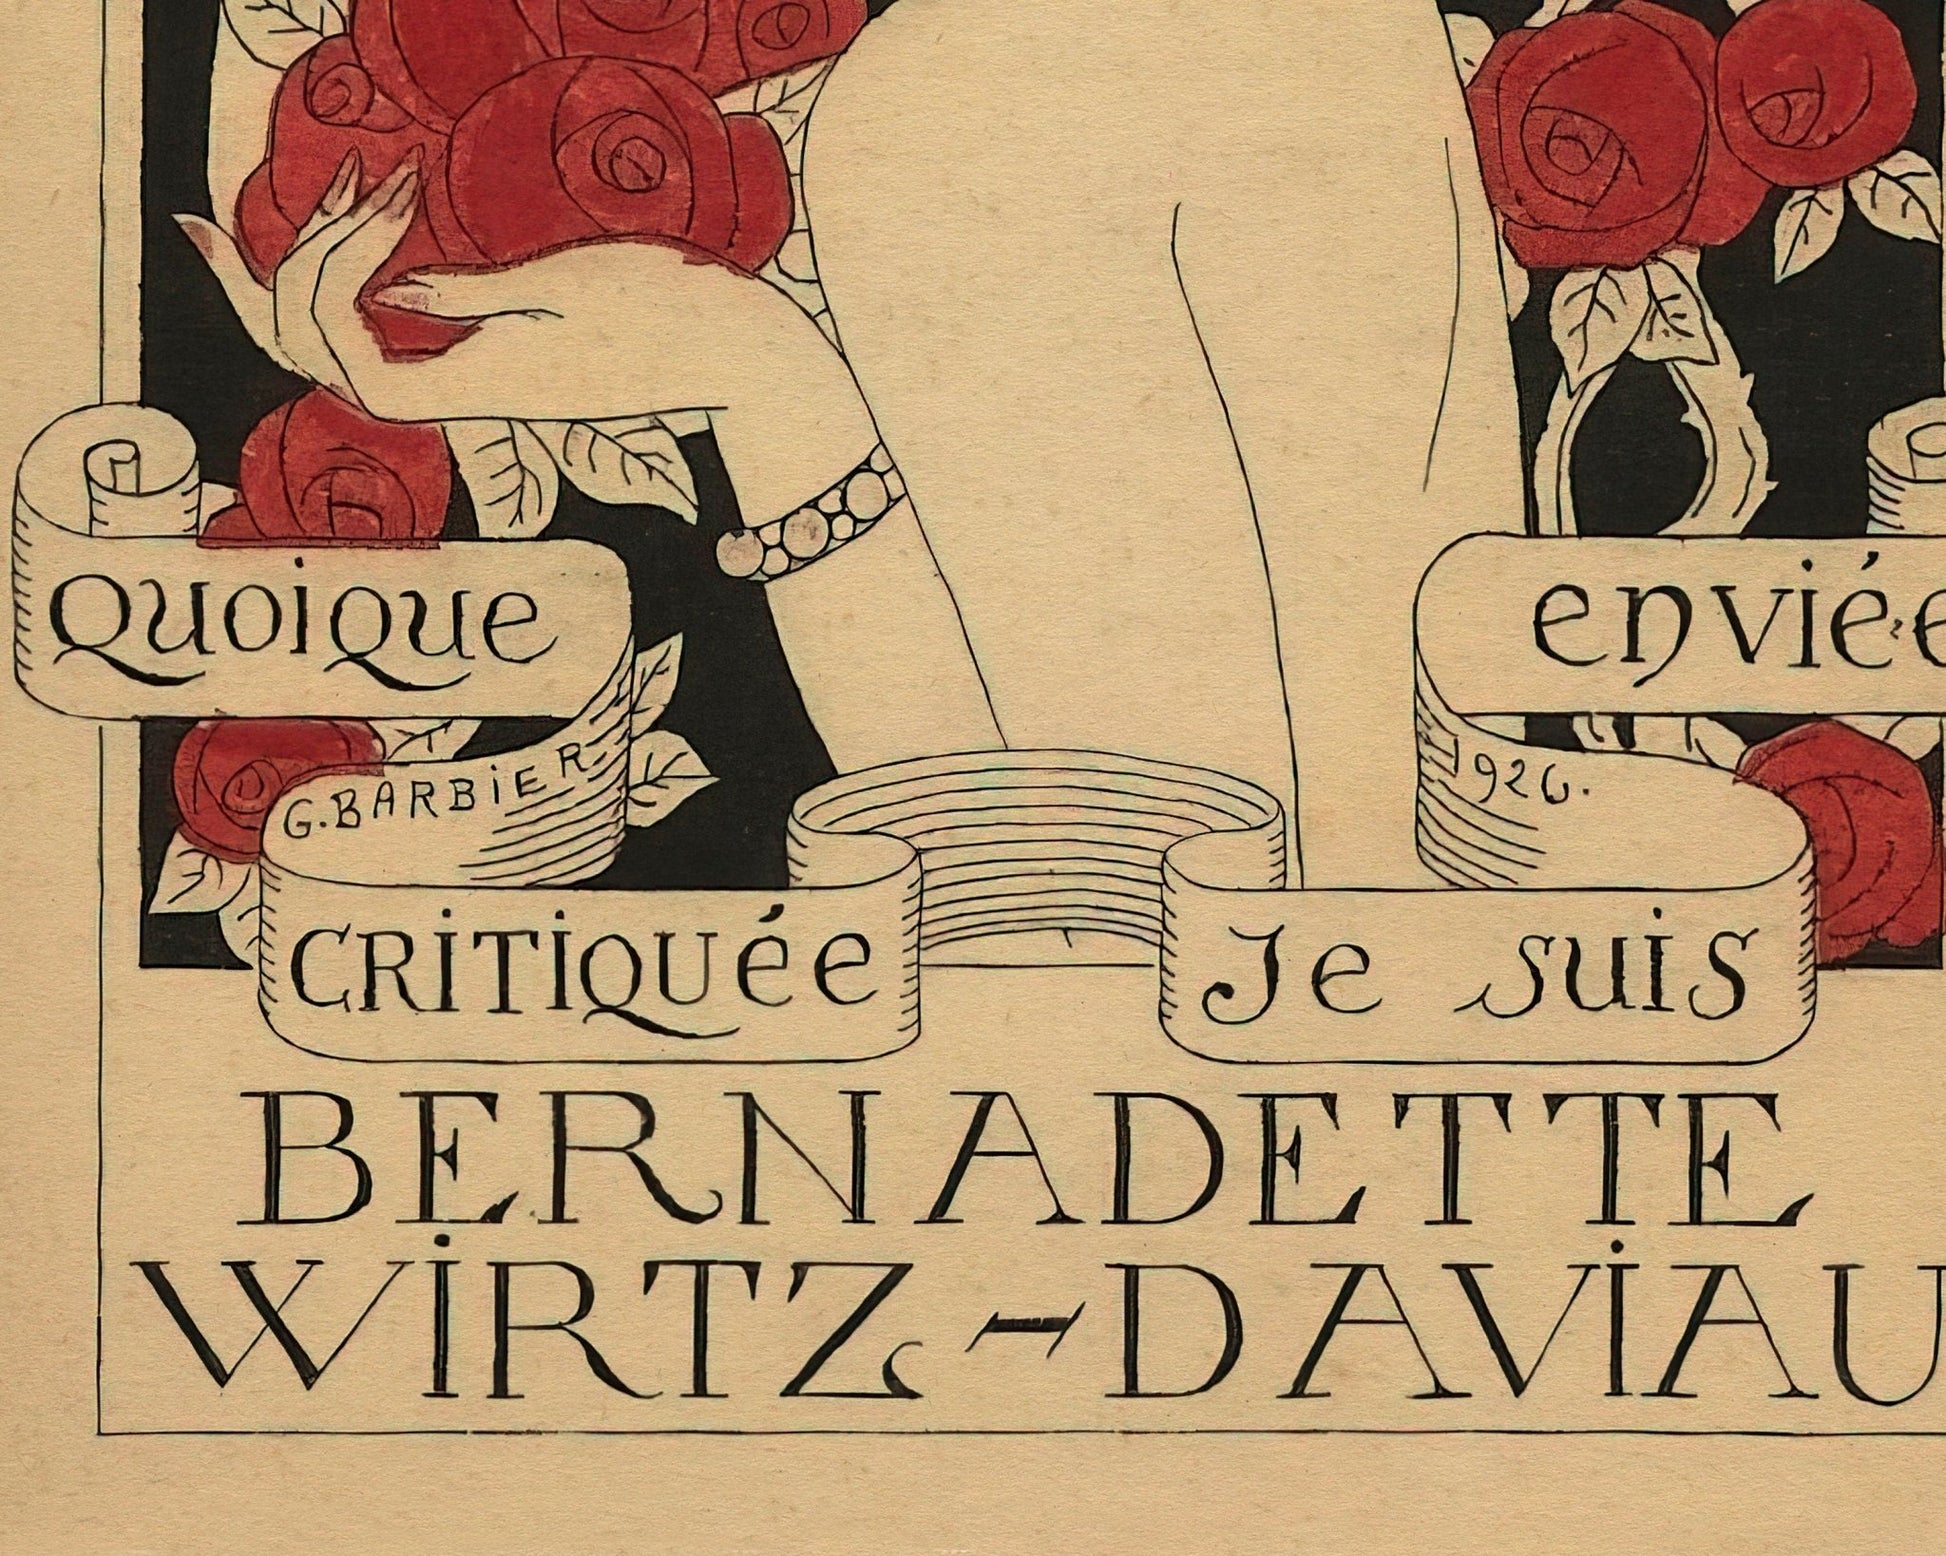 George Barbier "Bernadette Wirtz - Daviau" (1926) Ex - Libris / Bookplate - Mabon Gallery